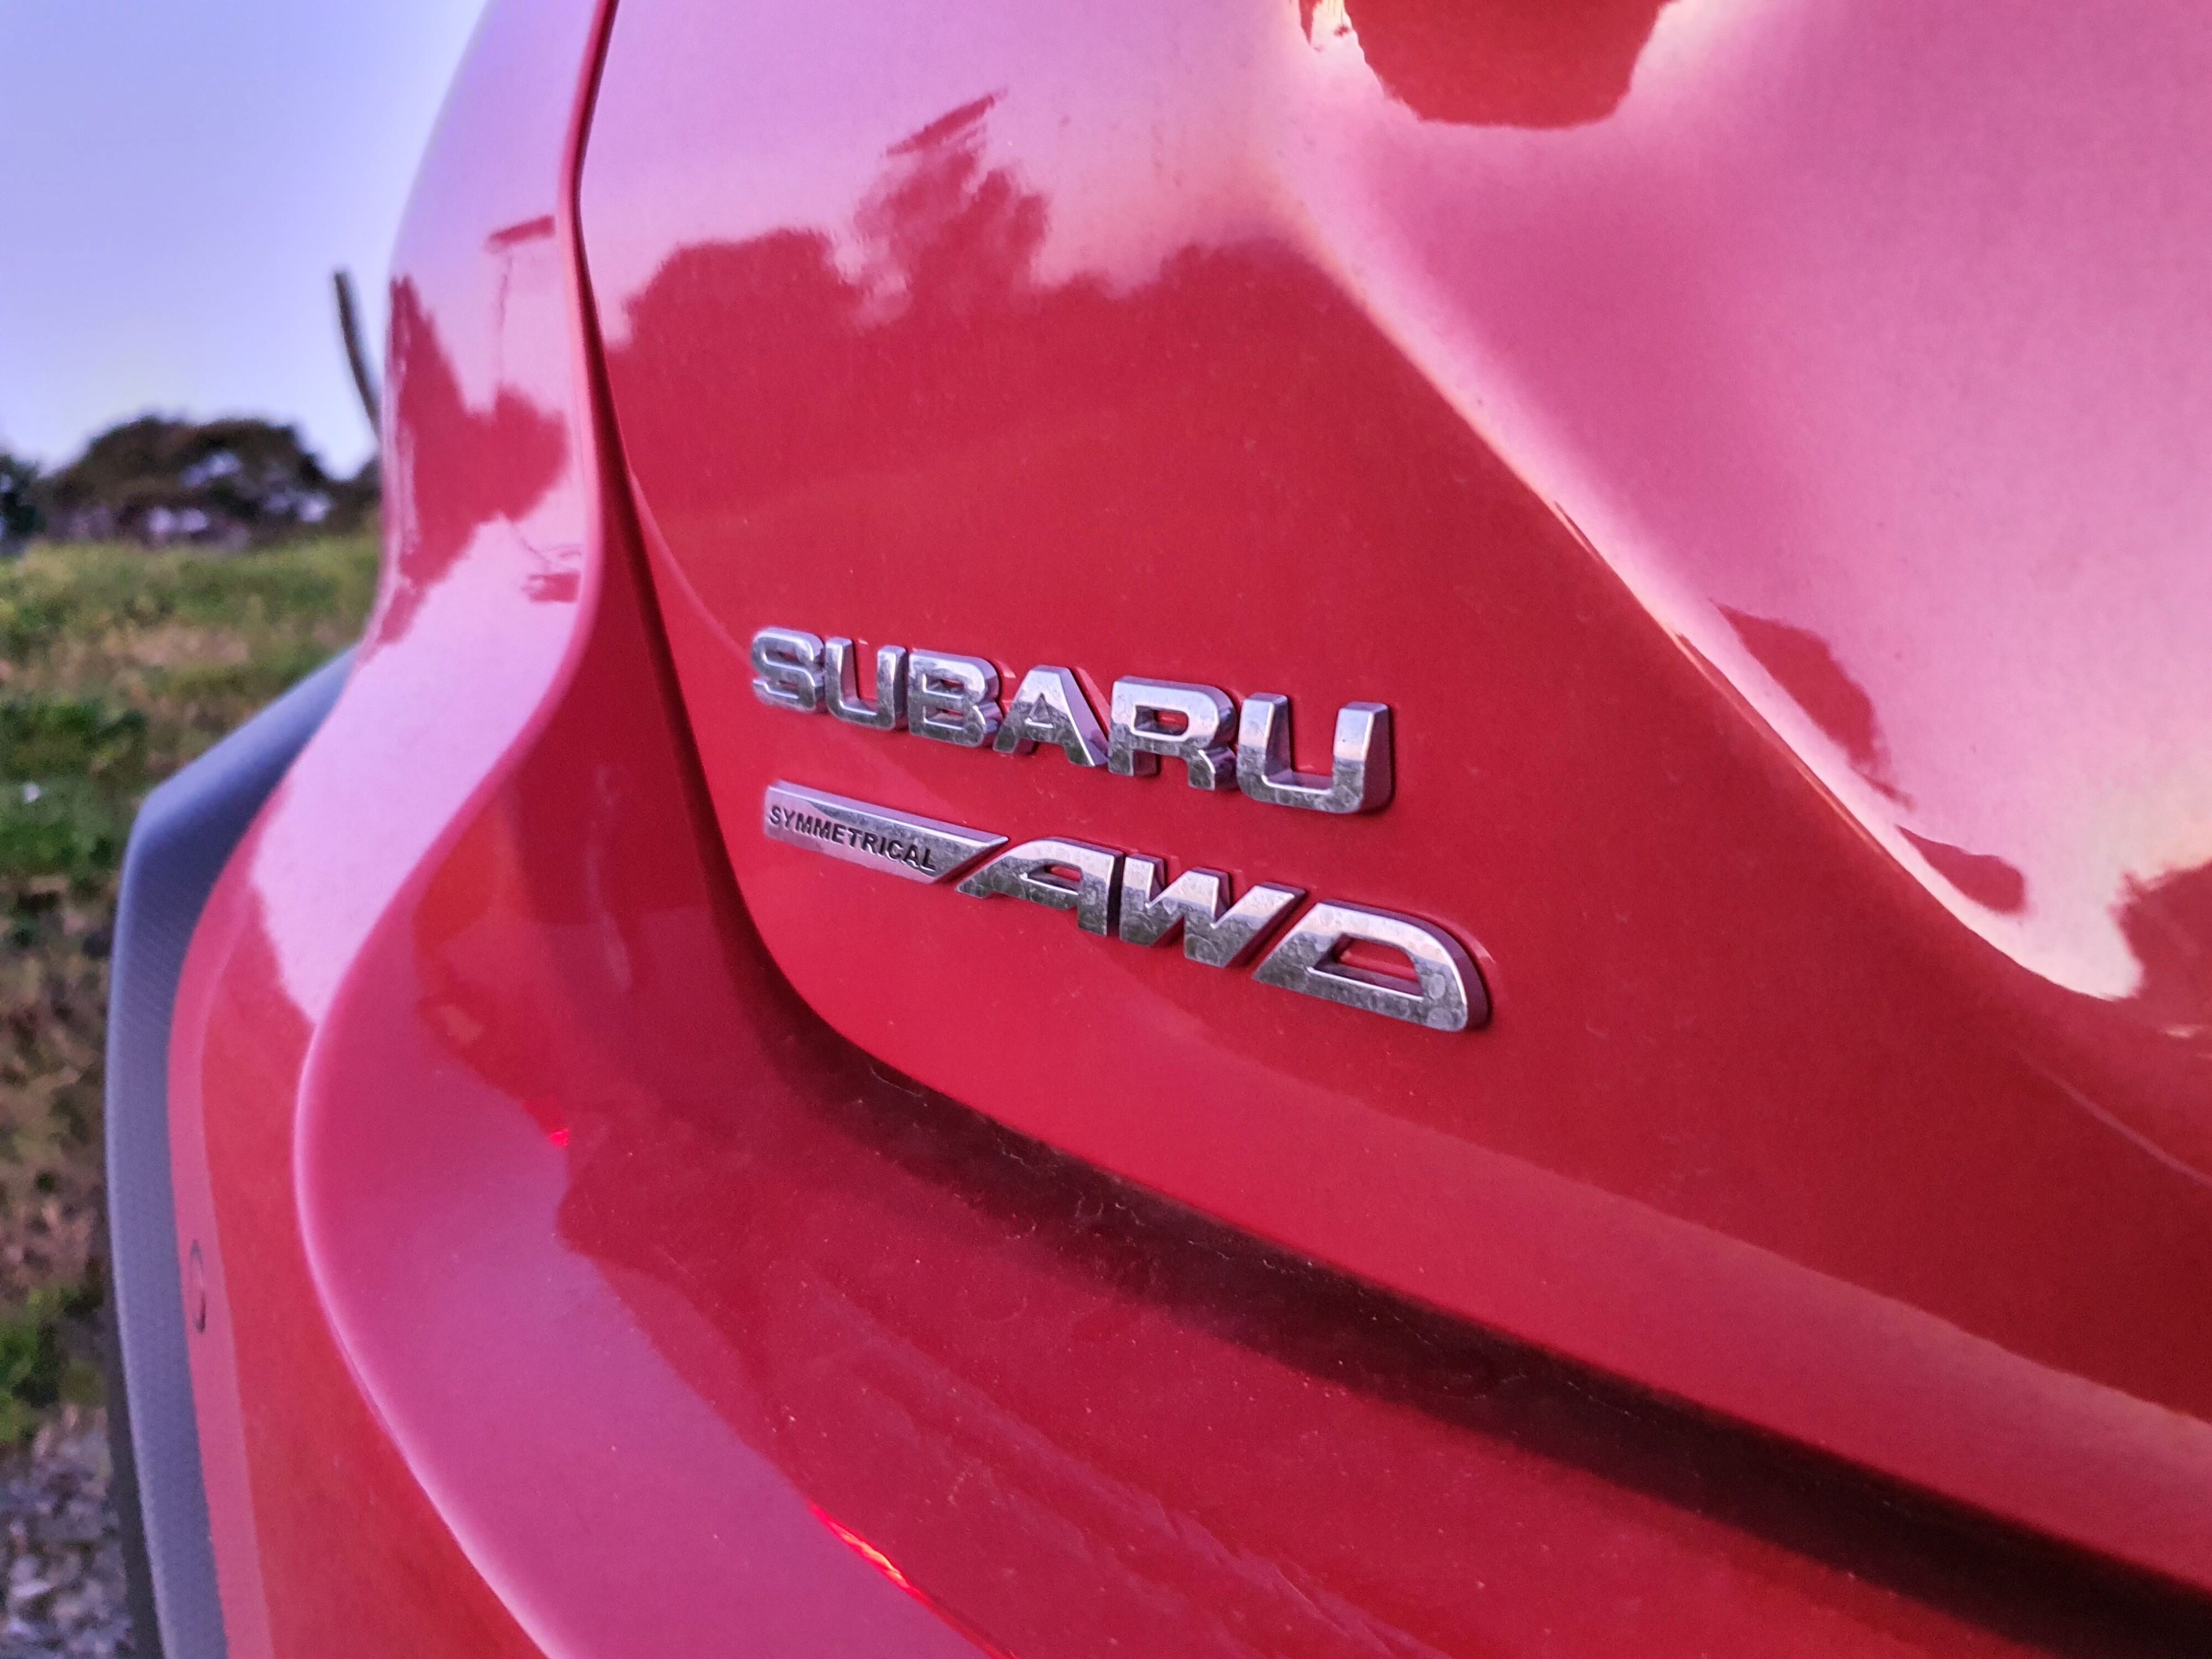 Subaru Symmetrical AWD badge highlighted on the 2023 Crosstrek